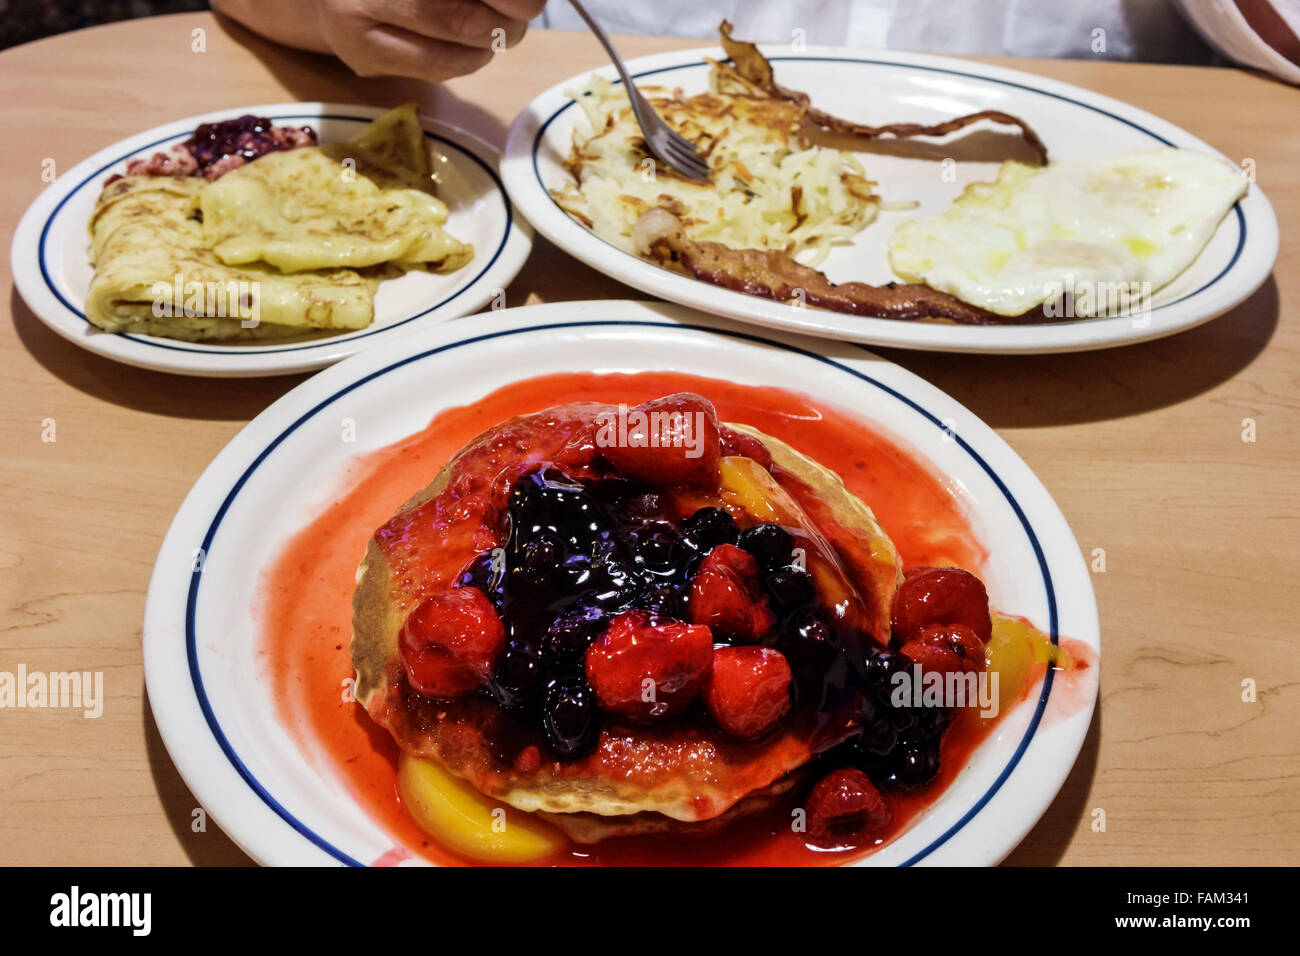 ihop pancake restaurant florida usa Stock Photo - Alamy